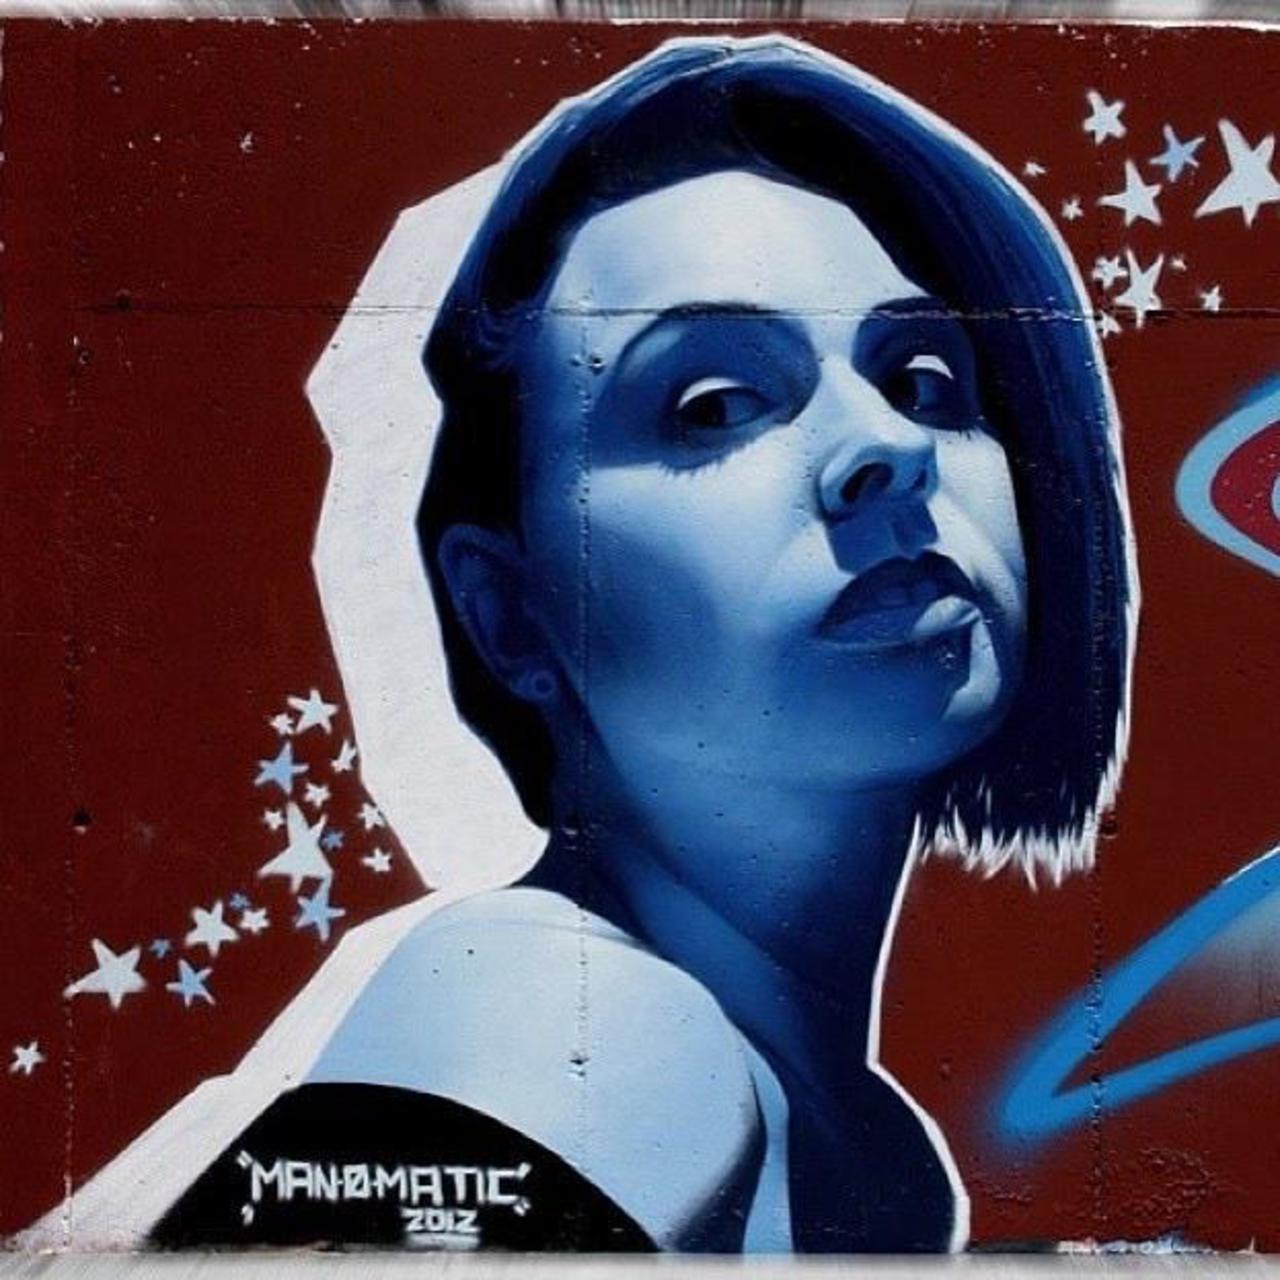 RT @artpushr: via #spotminder "http://ift.tt/1NYKNZg" #graffiti #streetart http://t.co/ozLA6CZn1J